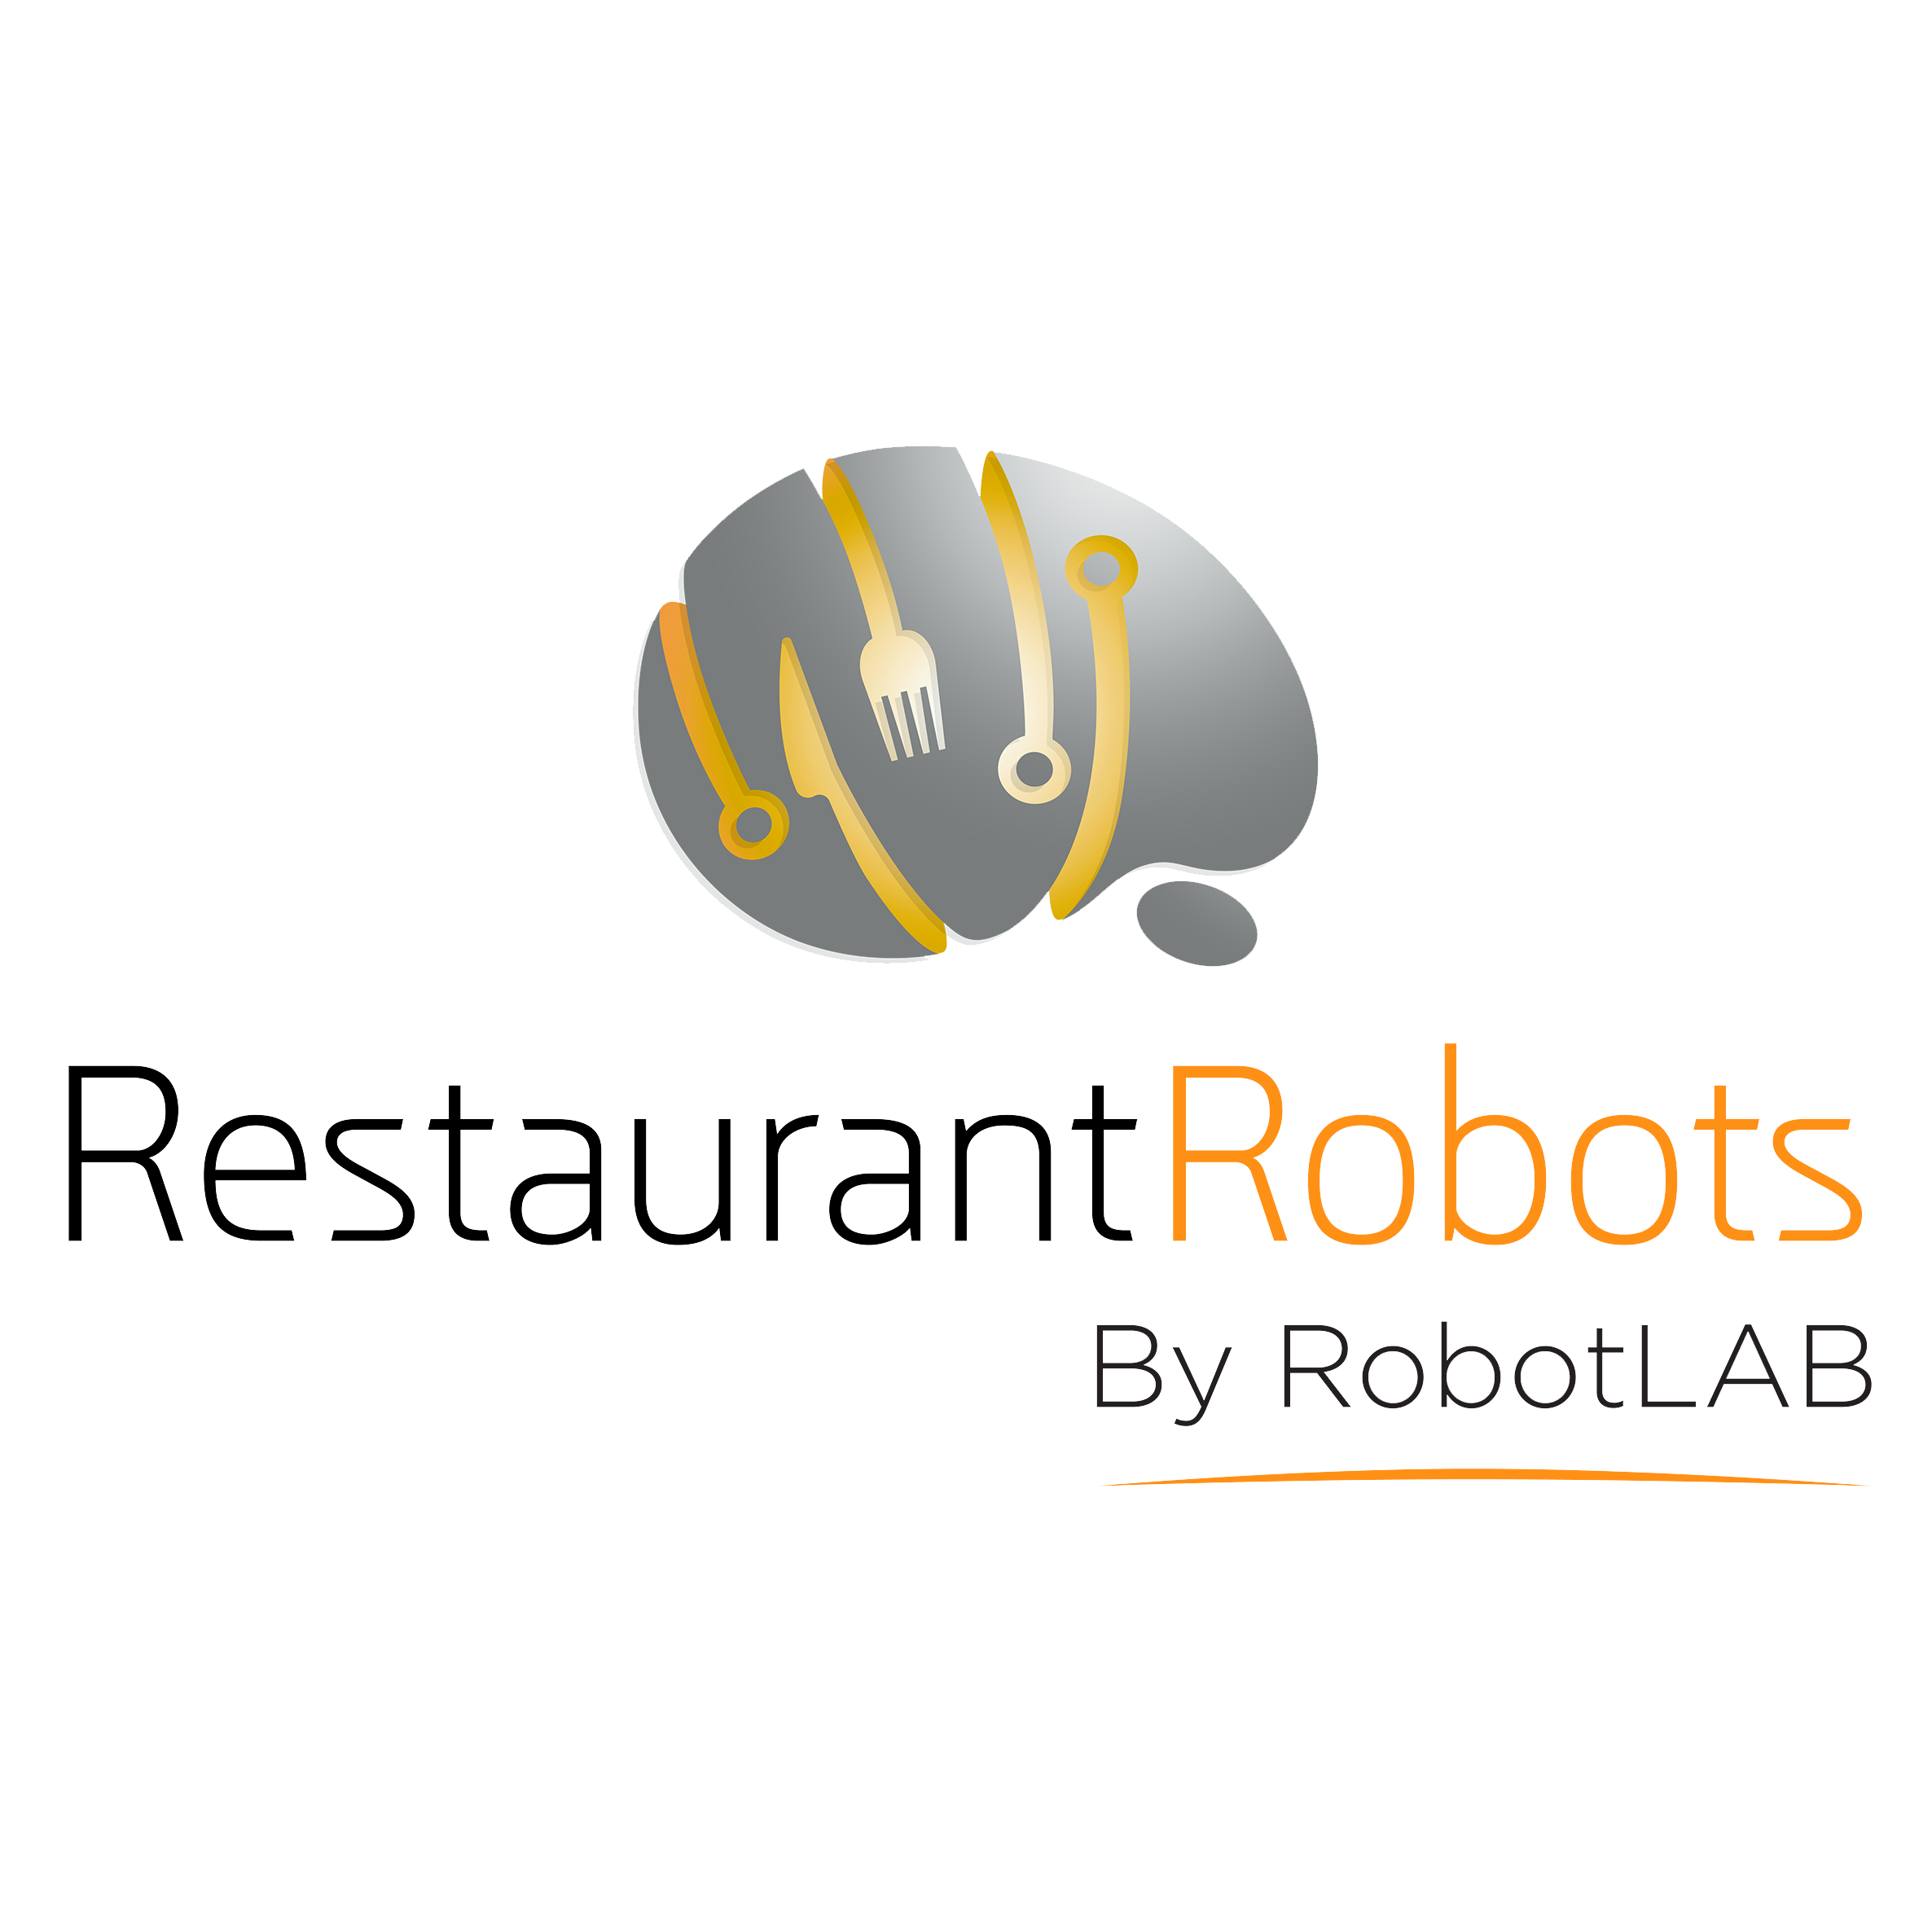 Restaurant Robots-logo- square